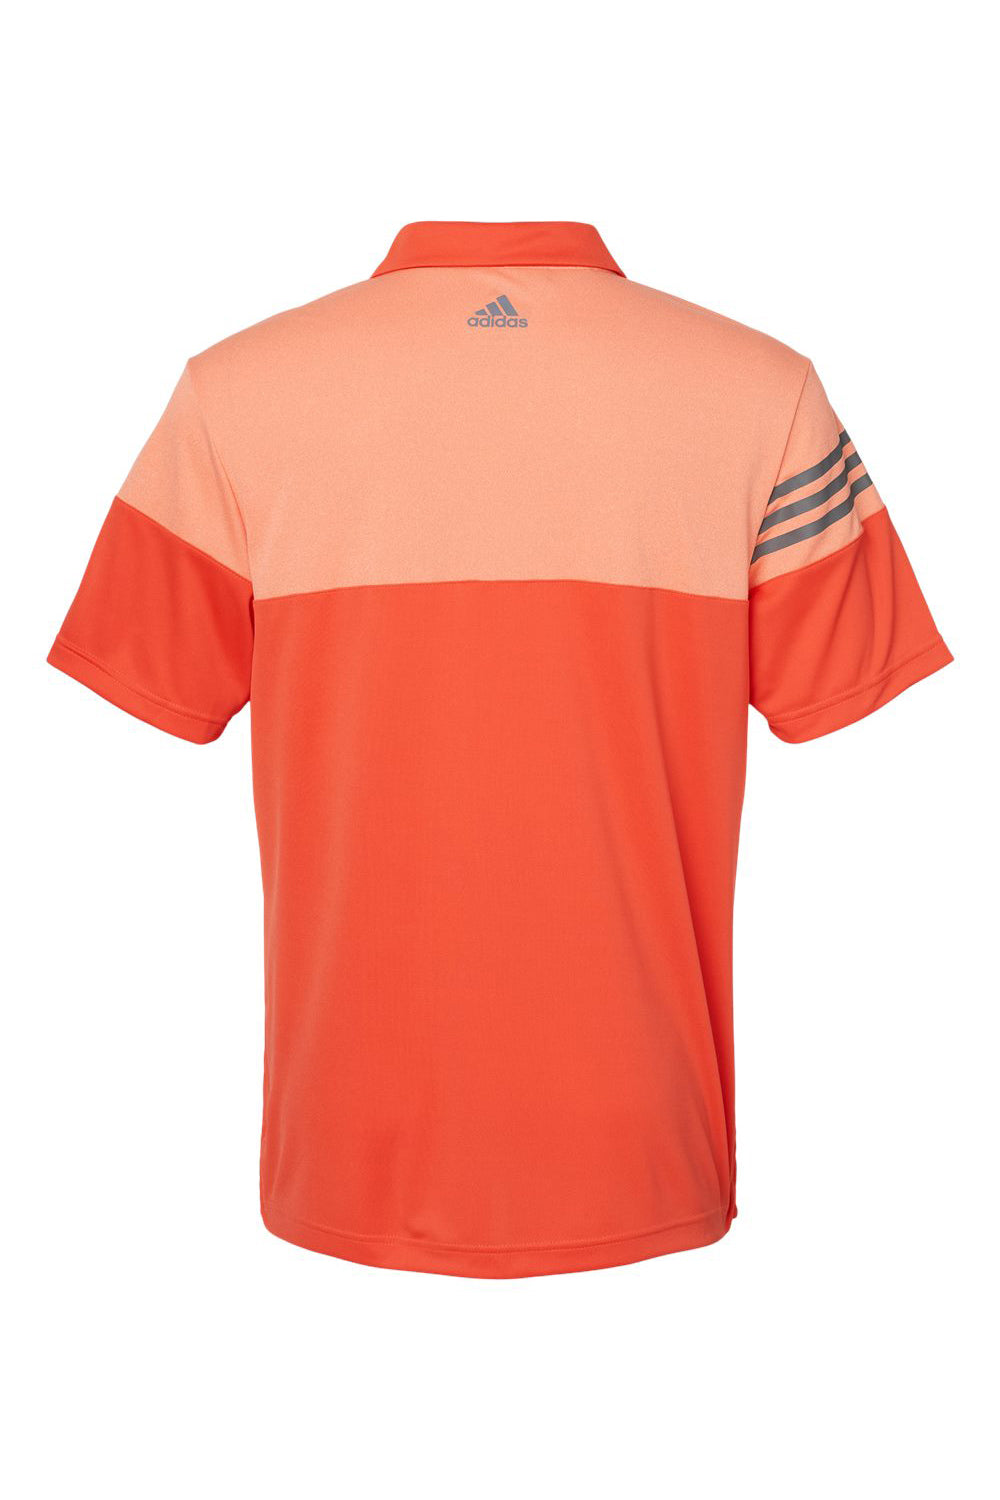 Adidas A213 Mens 3 Stripes Colorblock Moisture Wicking Short Sleeve Polo Shirt Blaze Orange/Vista Grey Flat Back